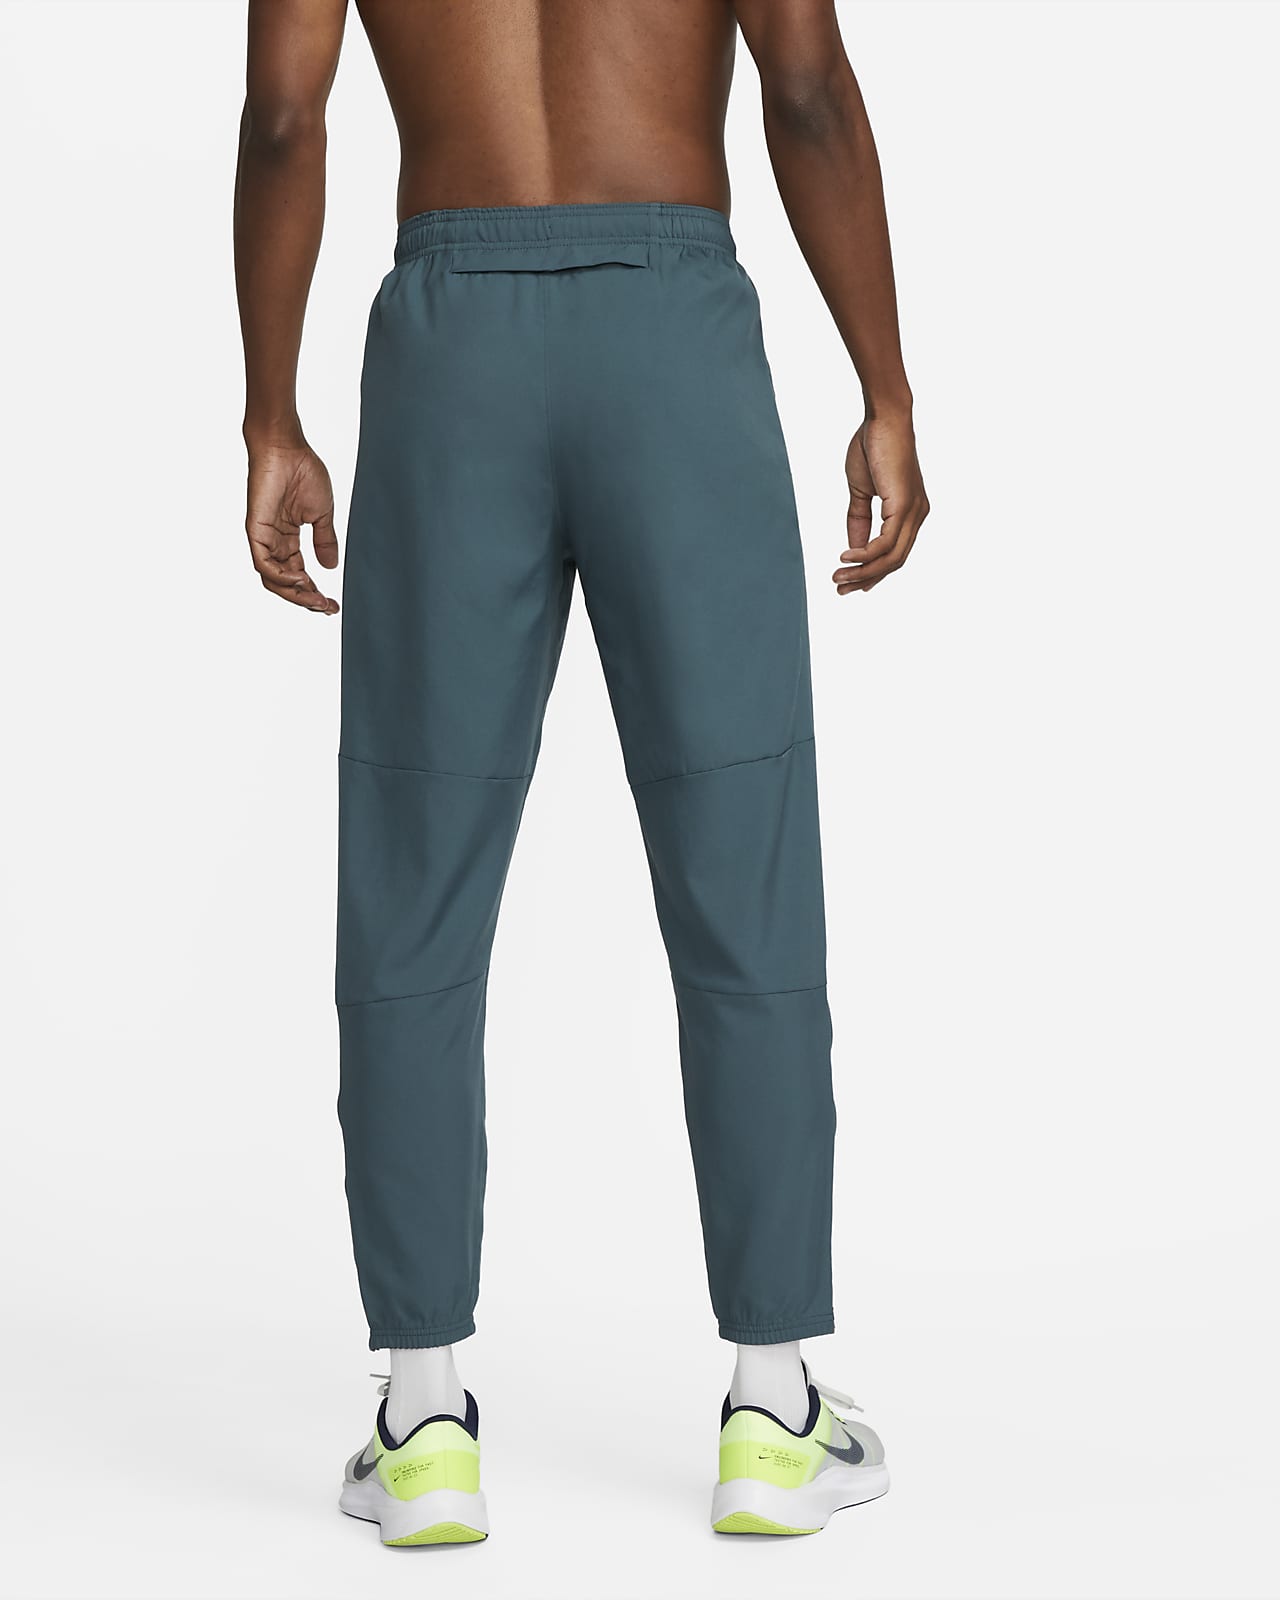 Hond Neem de telefoon op overal Nike Dri-FIT Challenger Men's Woven Running Pants. Nike.com